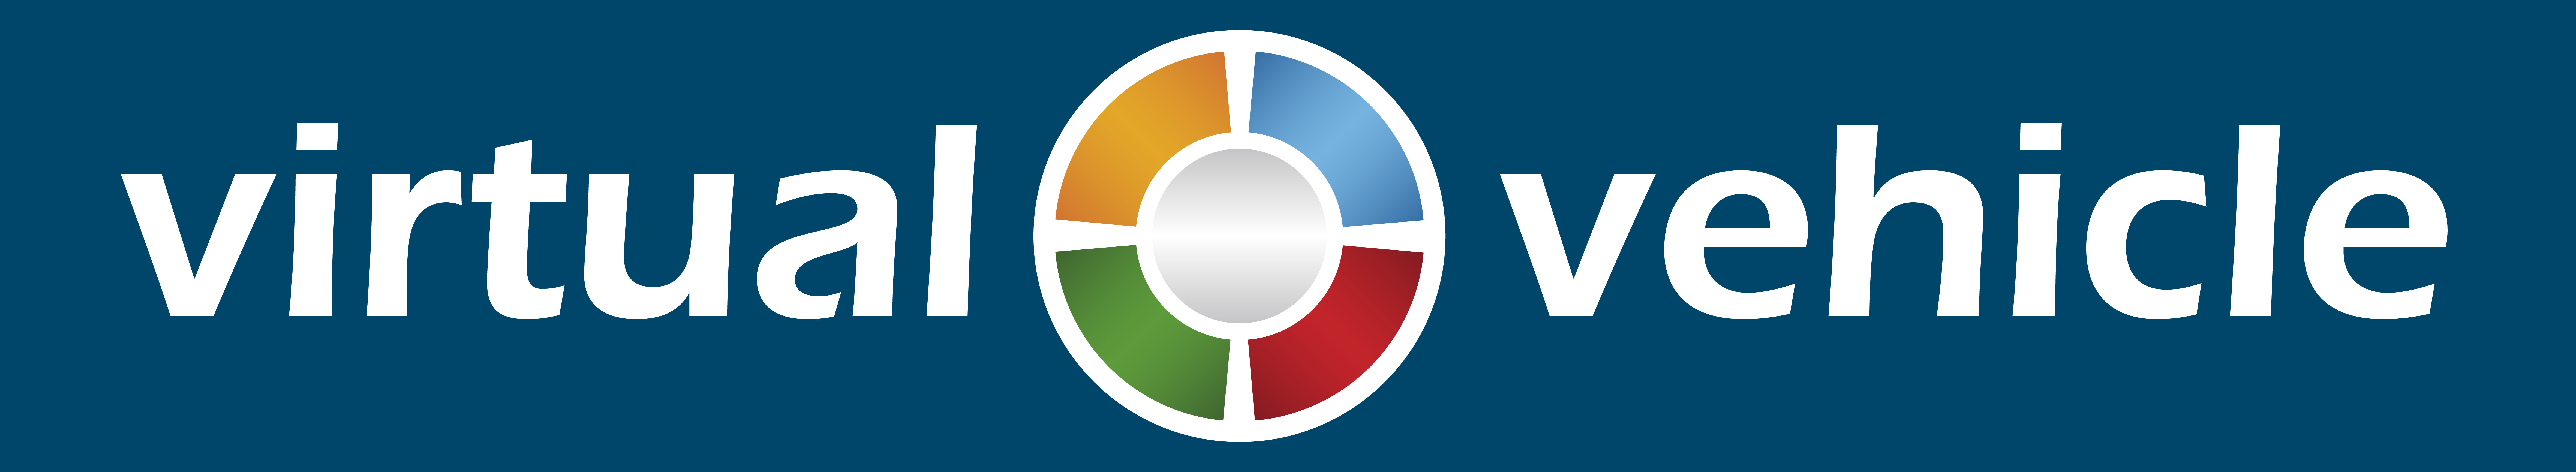 virtual vehicle Logo